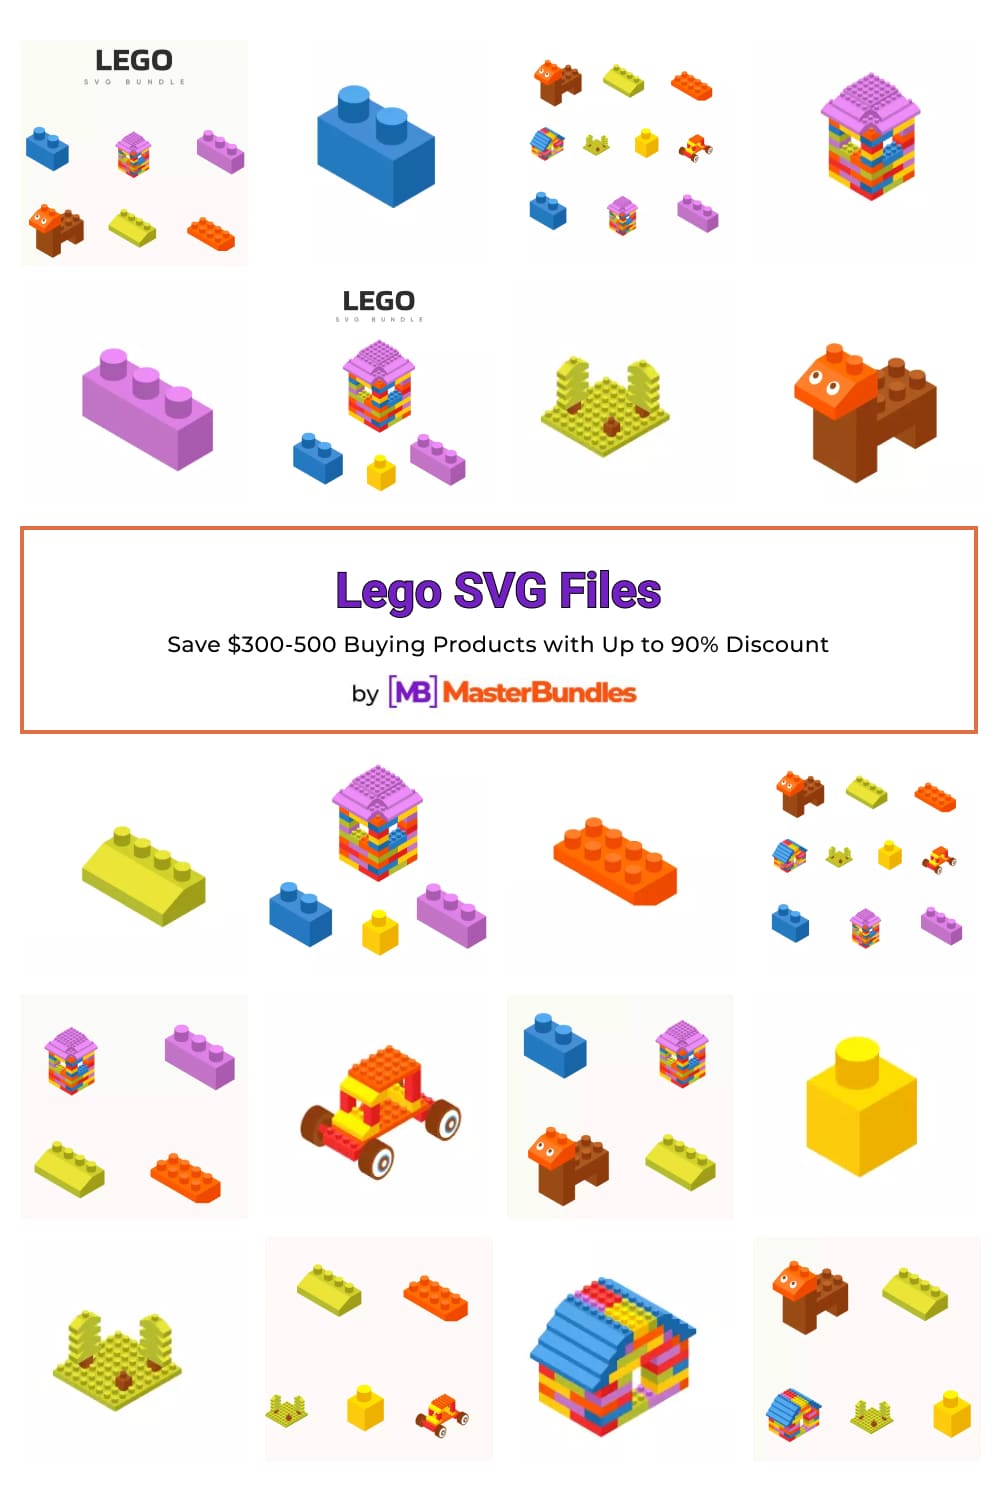 Lego SVG Files Pinterest image.